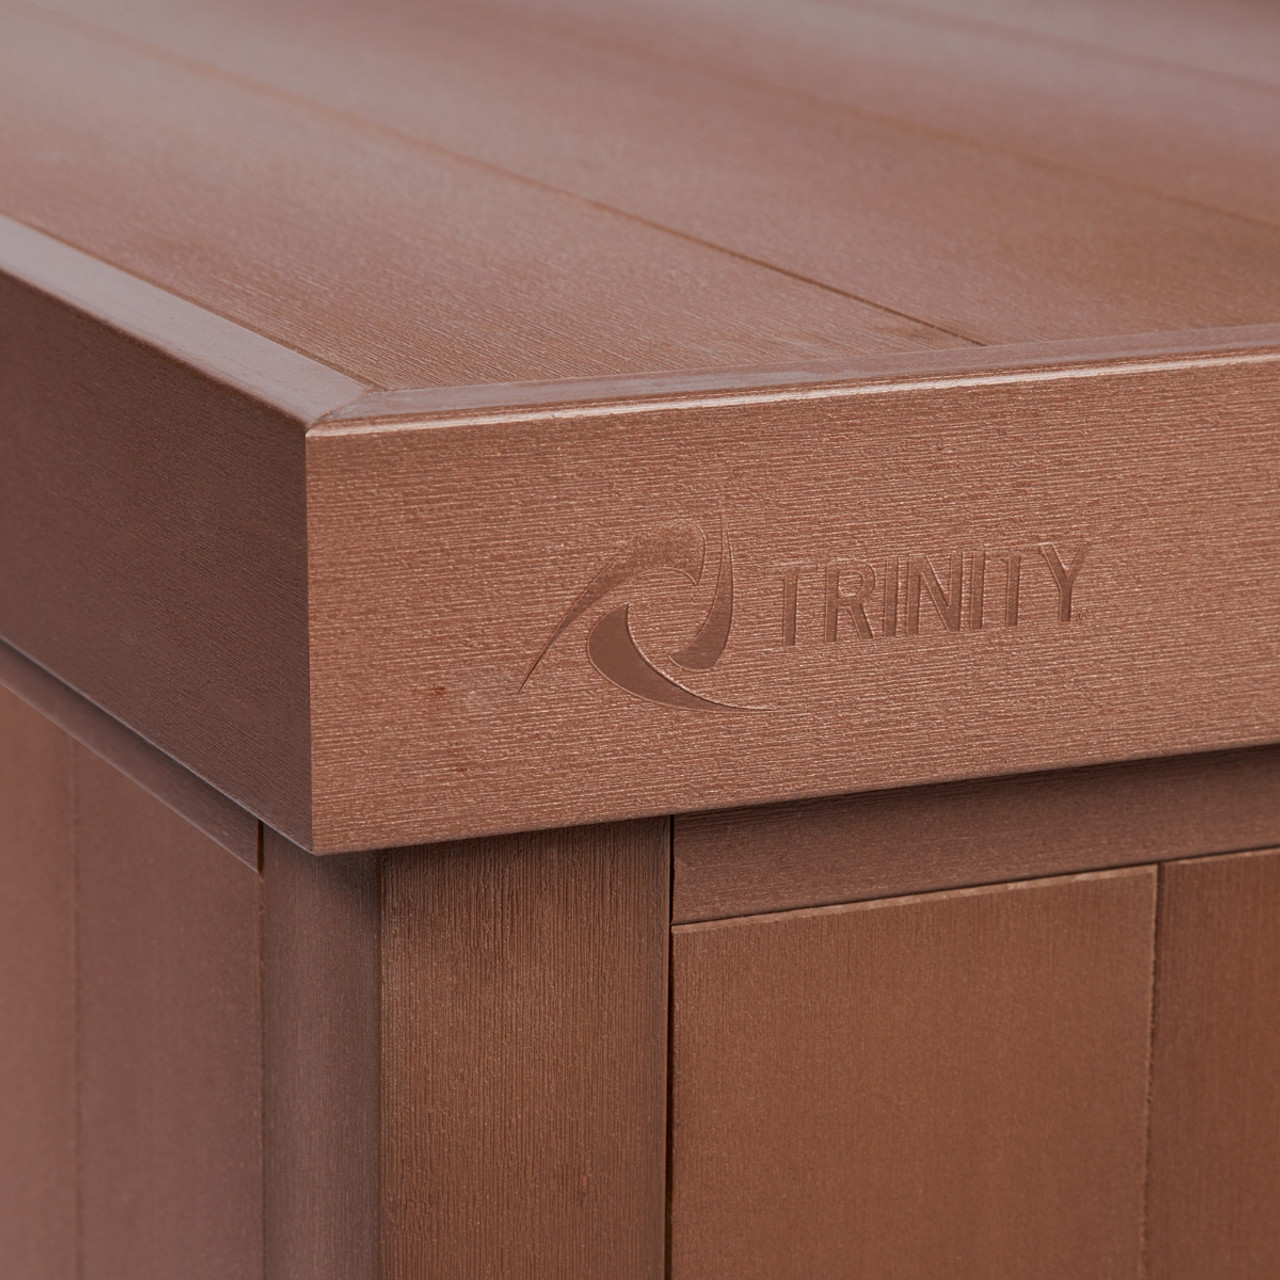 TRINITY EcoStorage® 70 Gallon Outdoor Deck Box, Amber Brown